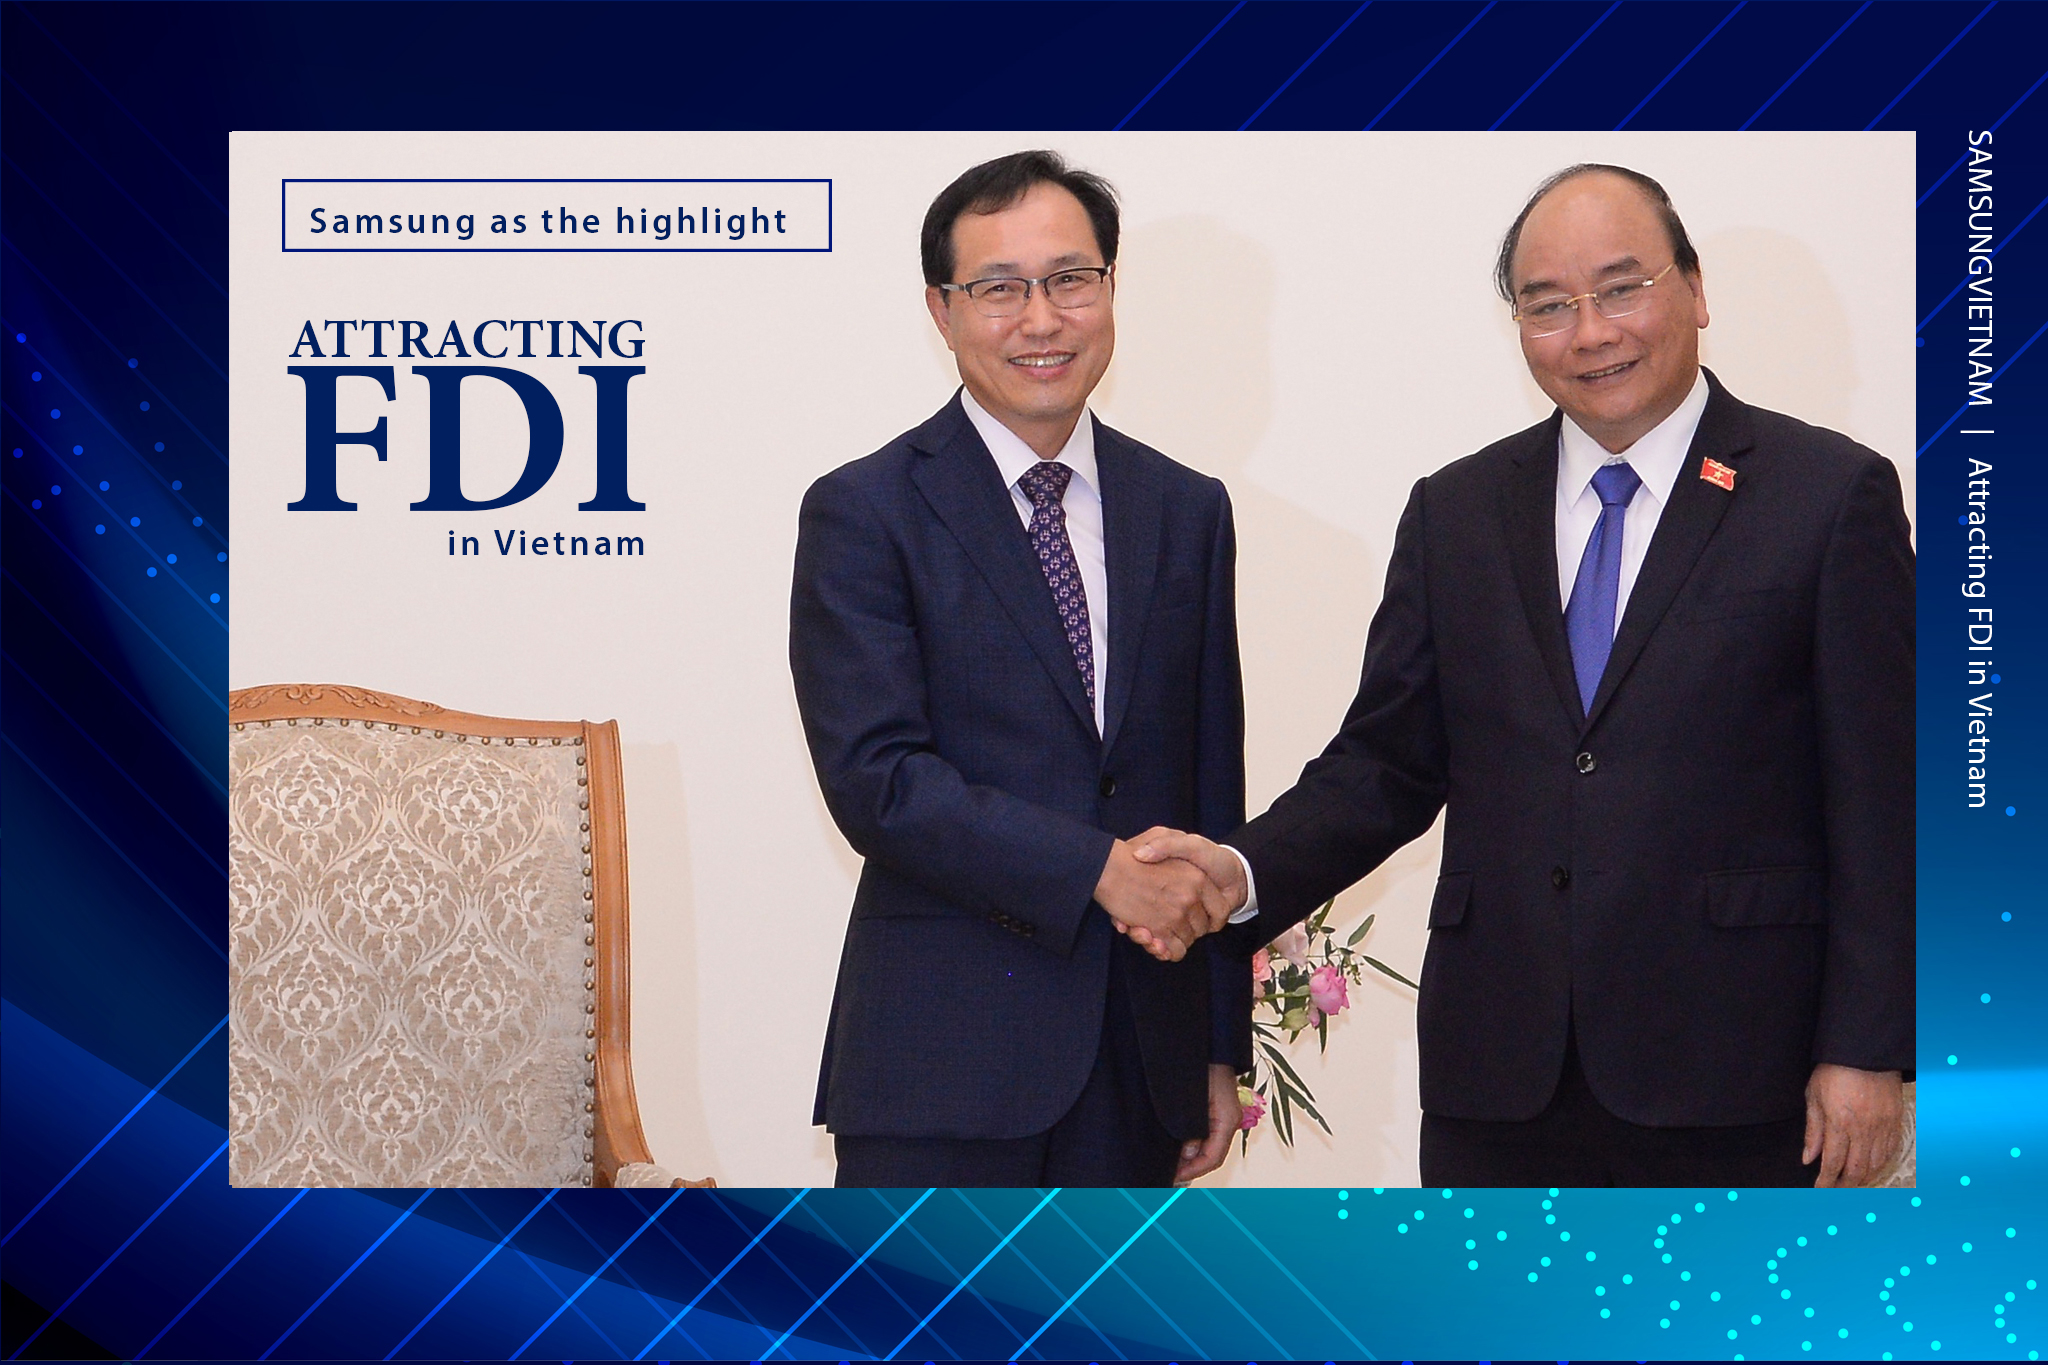 Attracting FDI in Vietnam: Samsung as the highlight